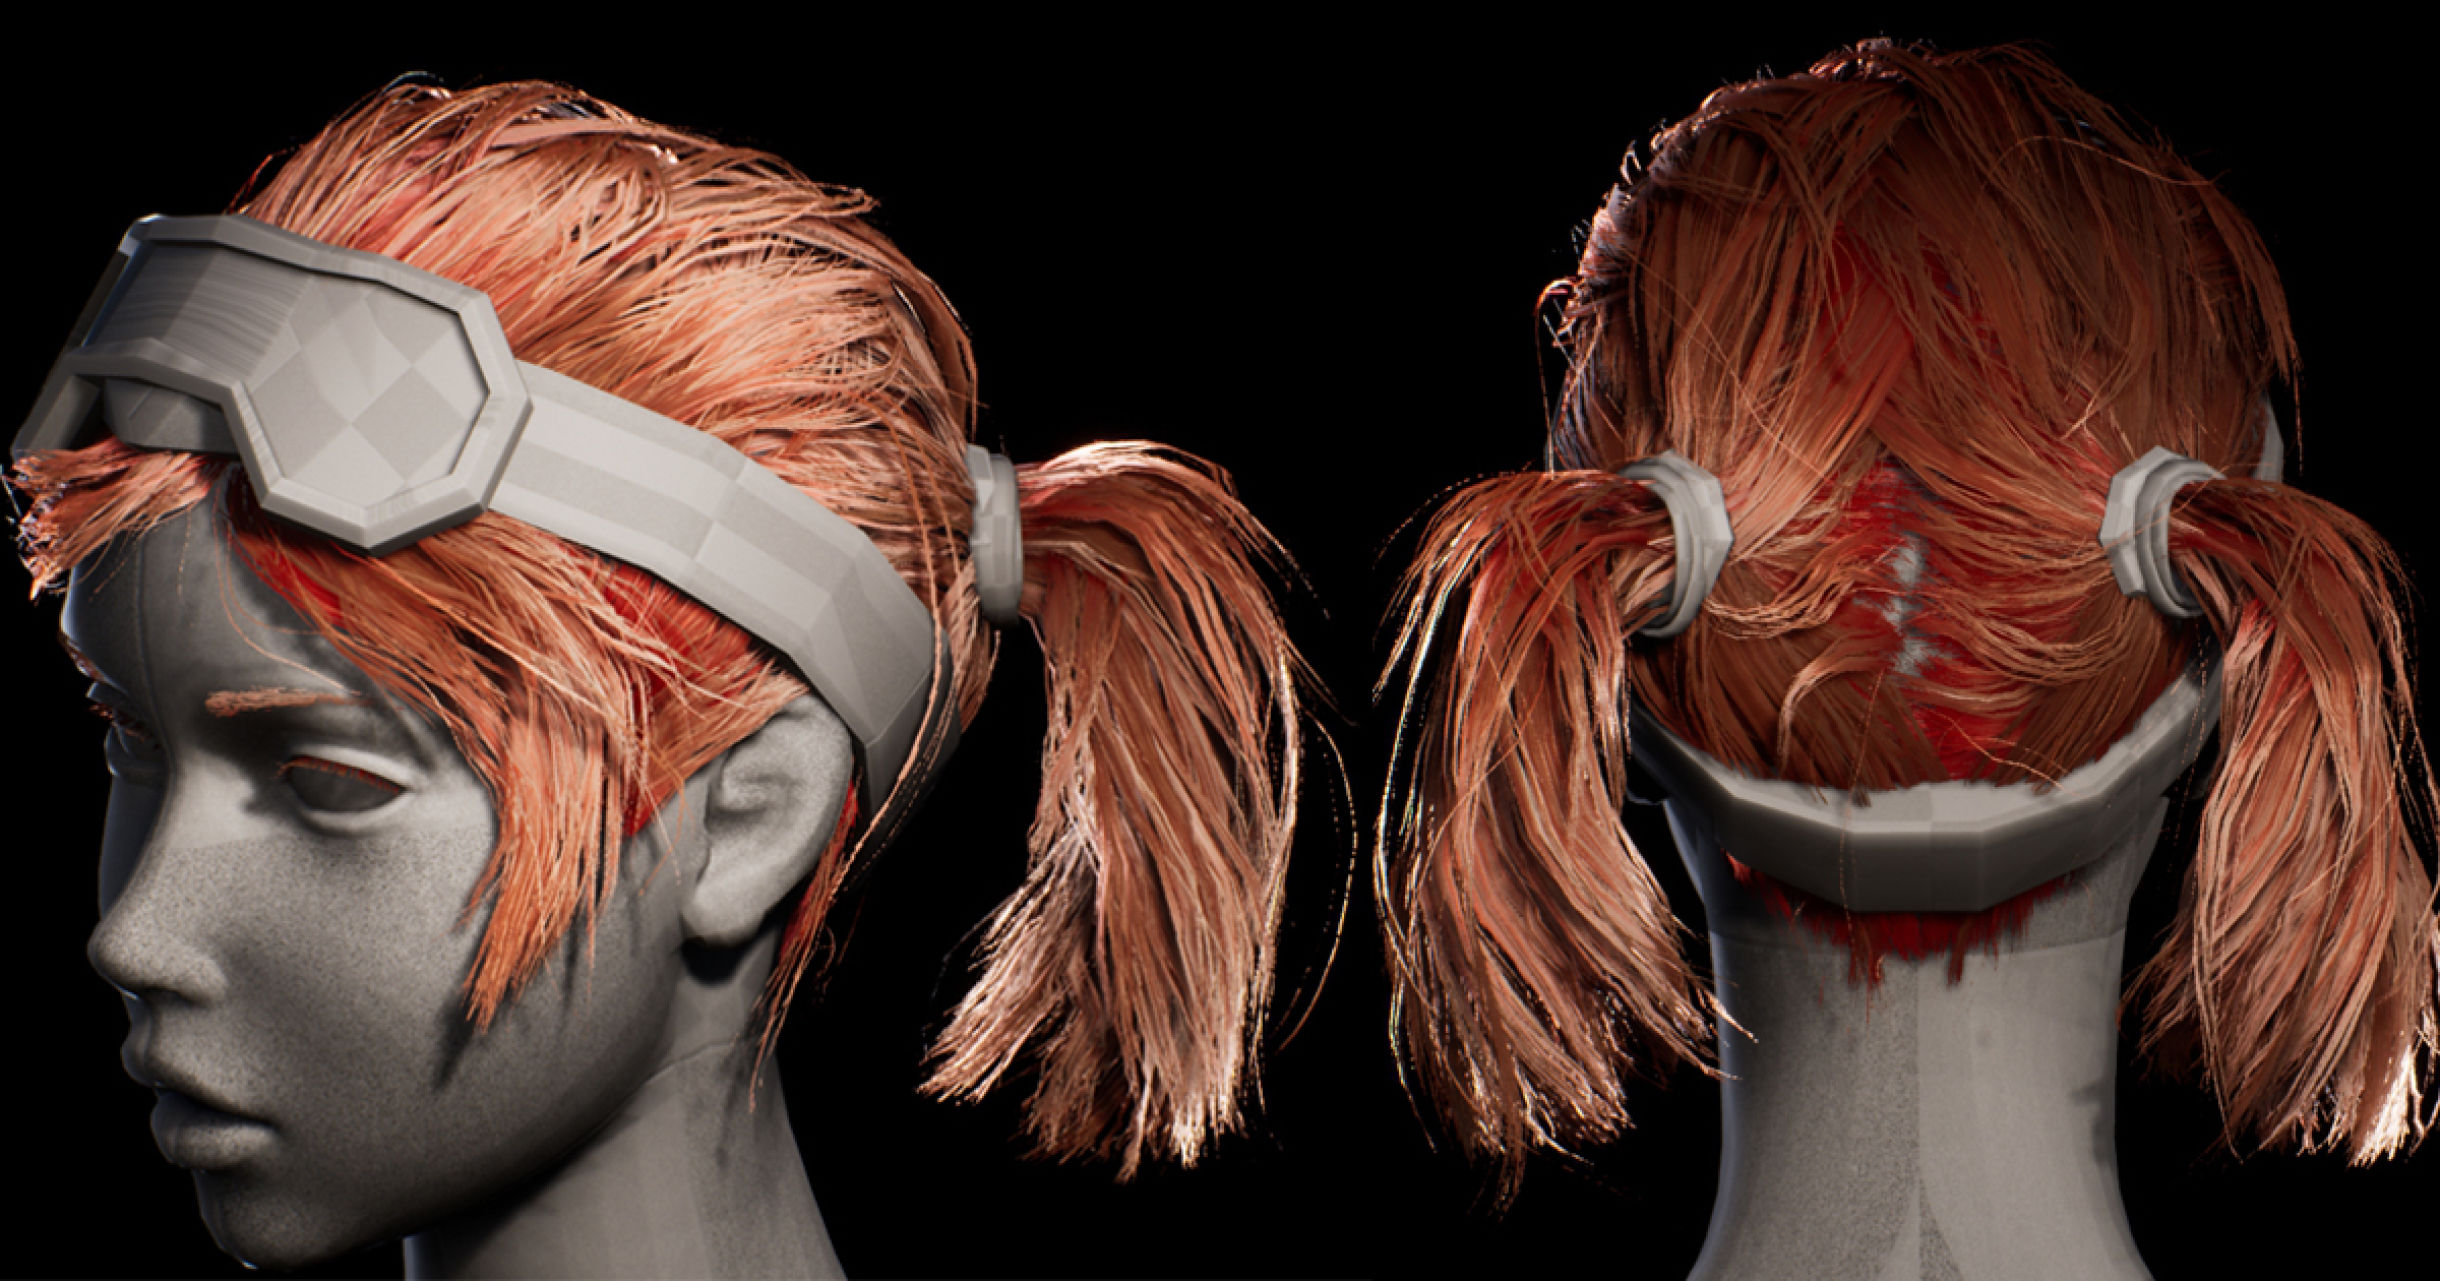 3D model Realistic Woman high ponytail long Hair Style VR / AR